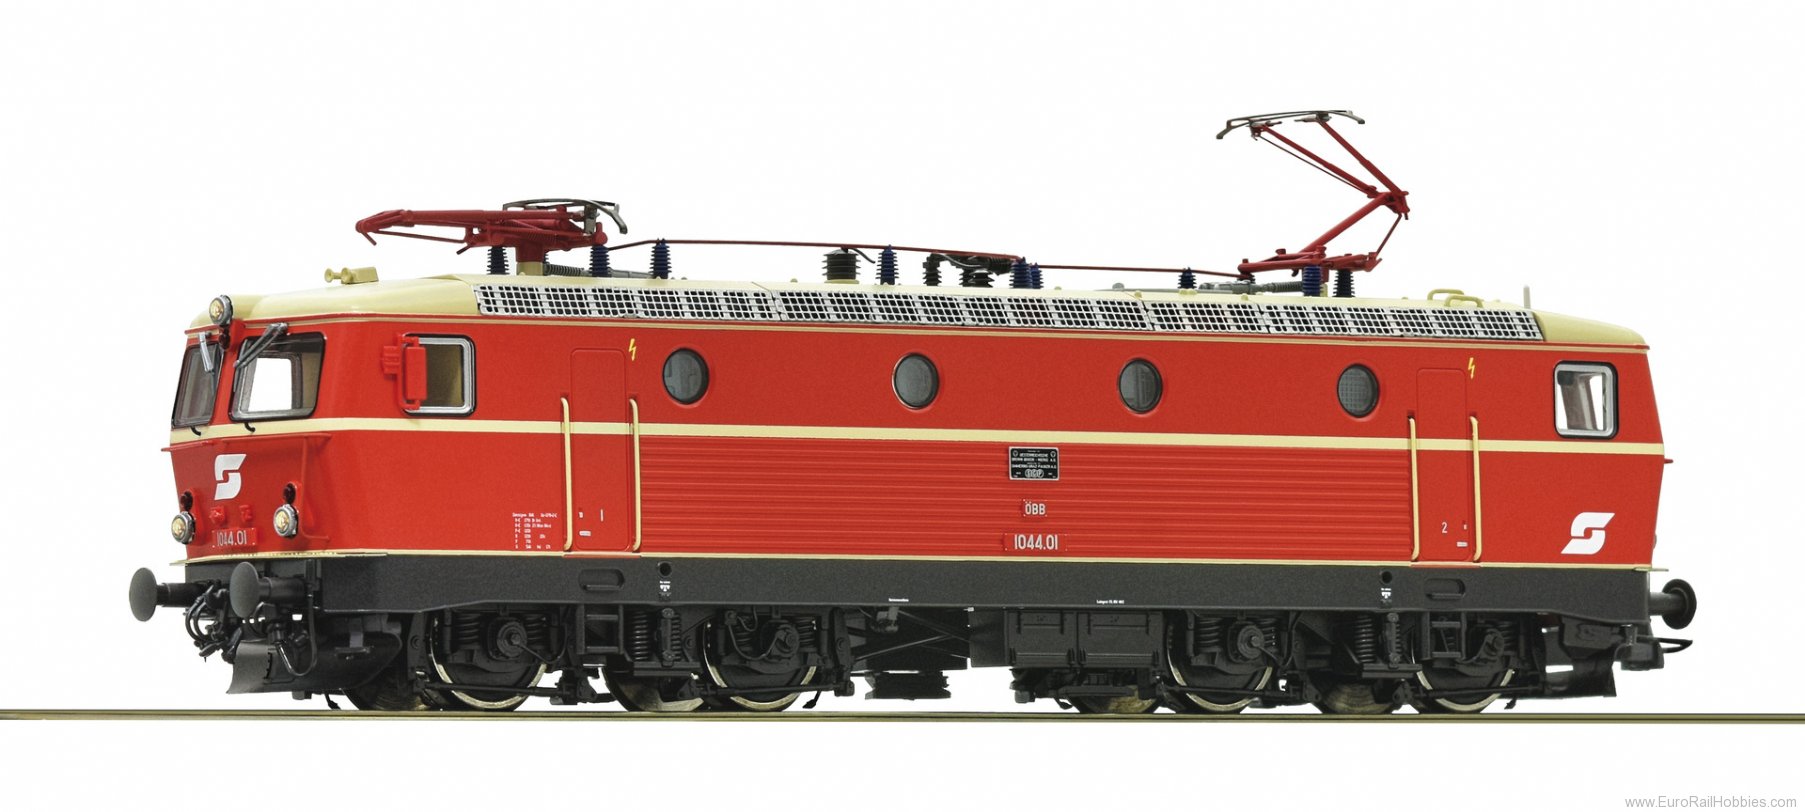 Roco 78434 OBB Electric locomotive 1044.01, (Marklin AC 